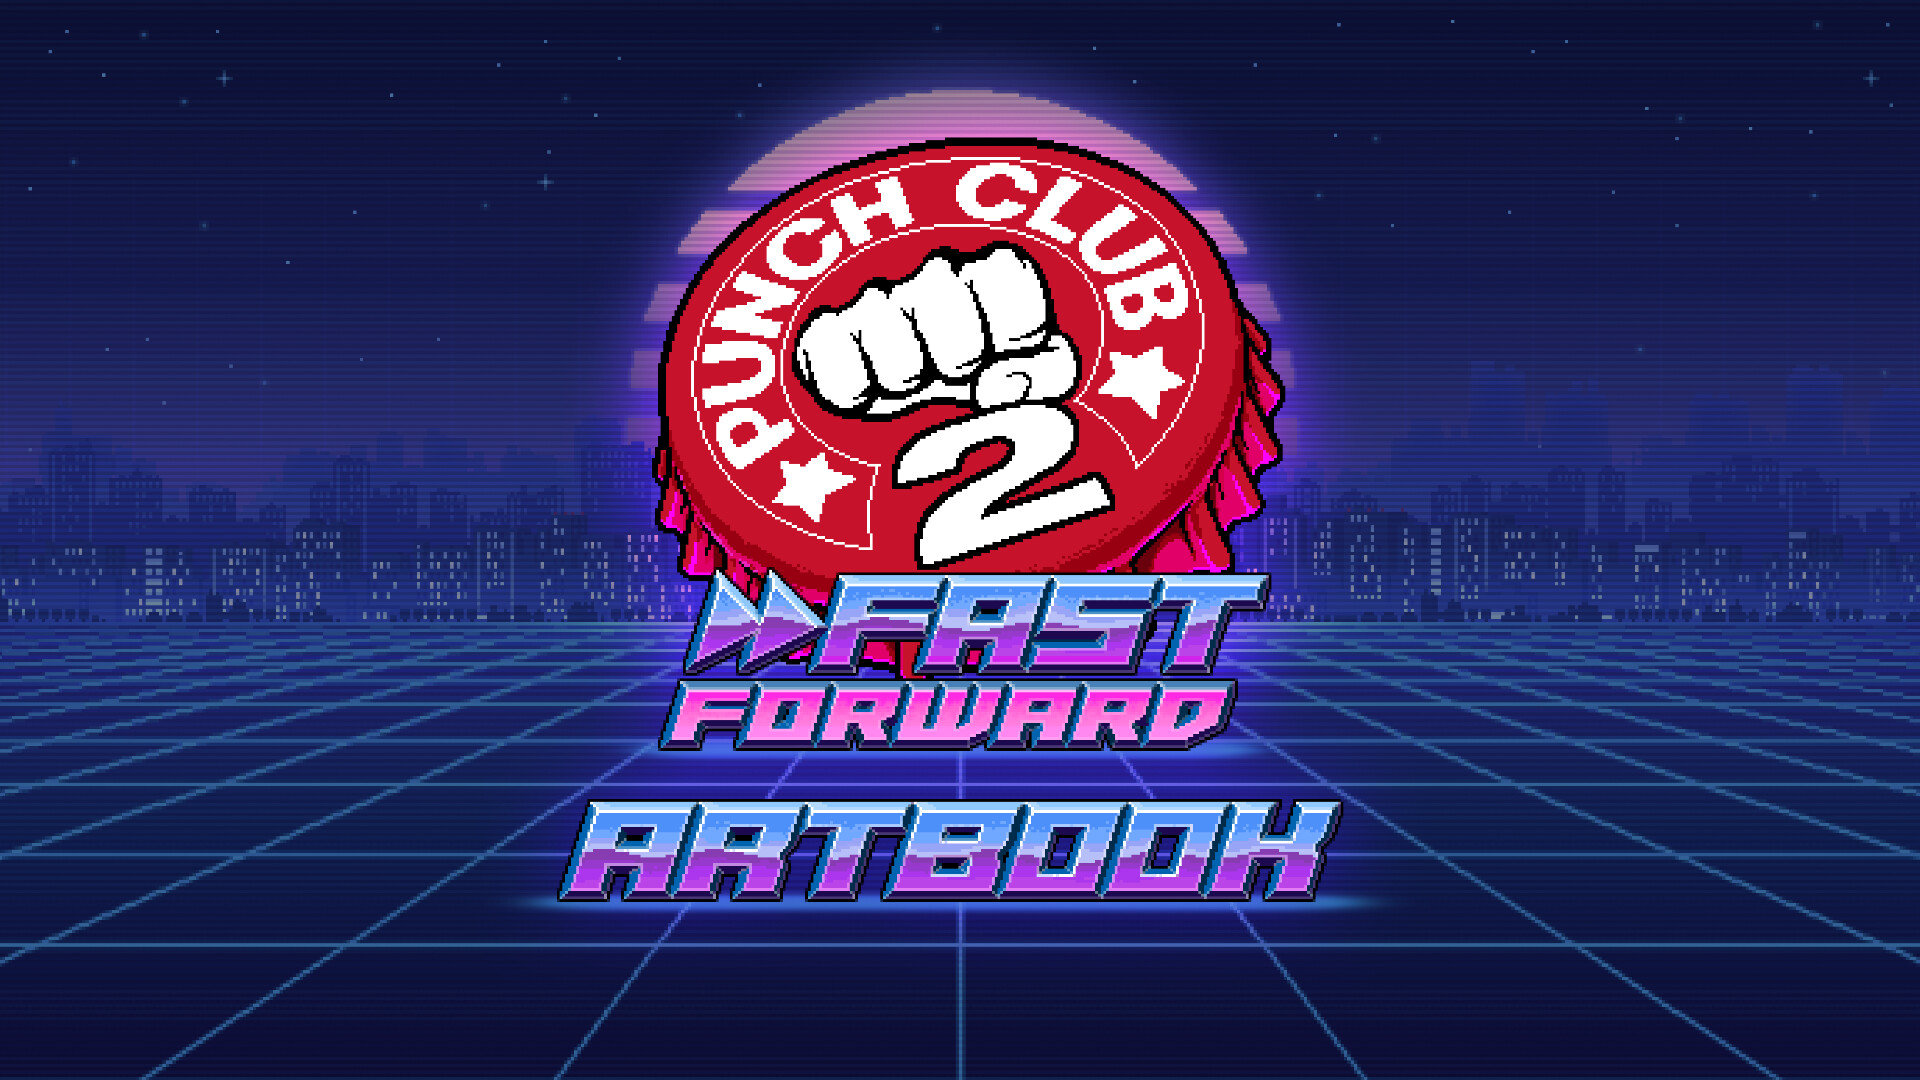 Punch Club 2: Fast Forward - Artbook and Comic Book Featured Screenshot #1